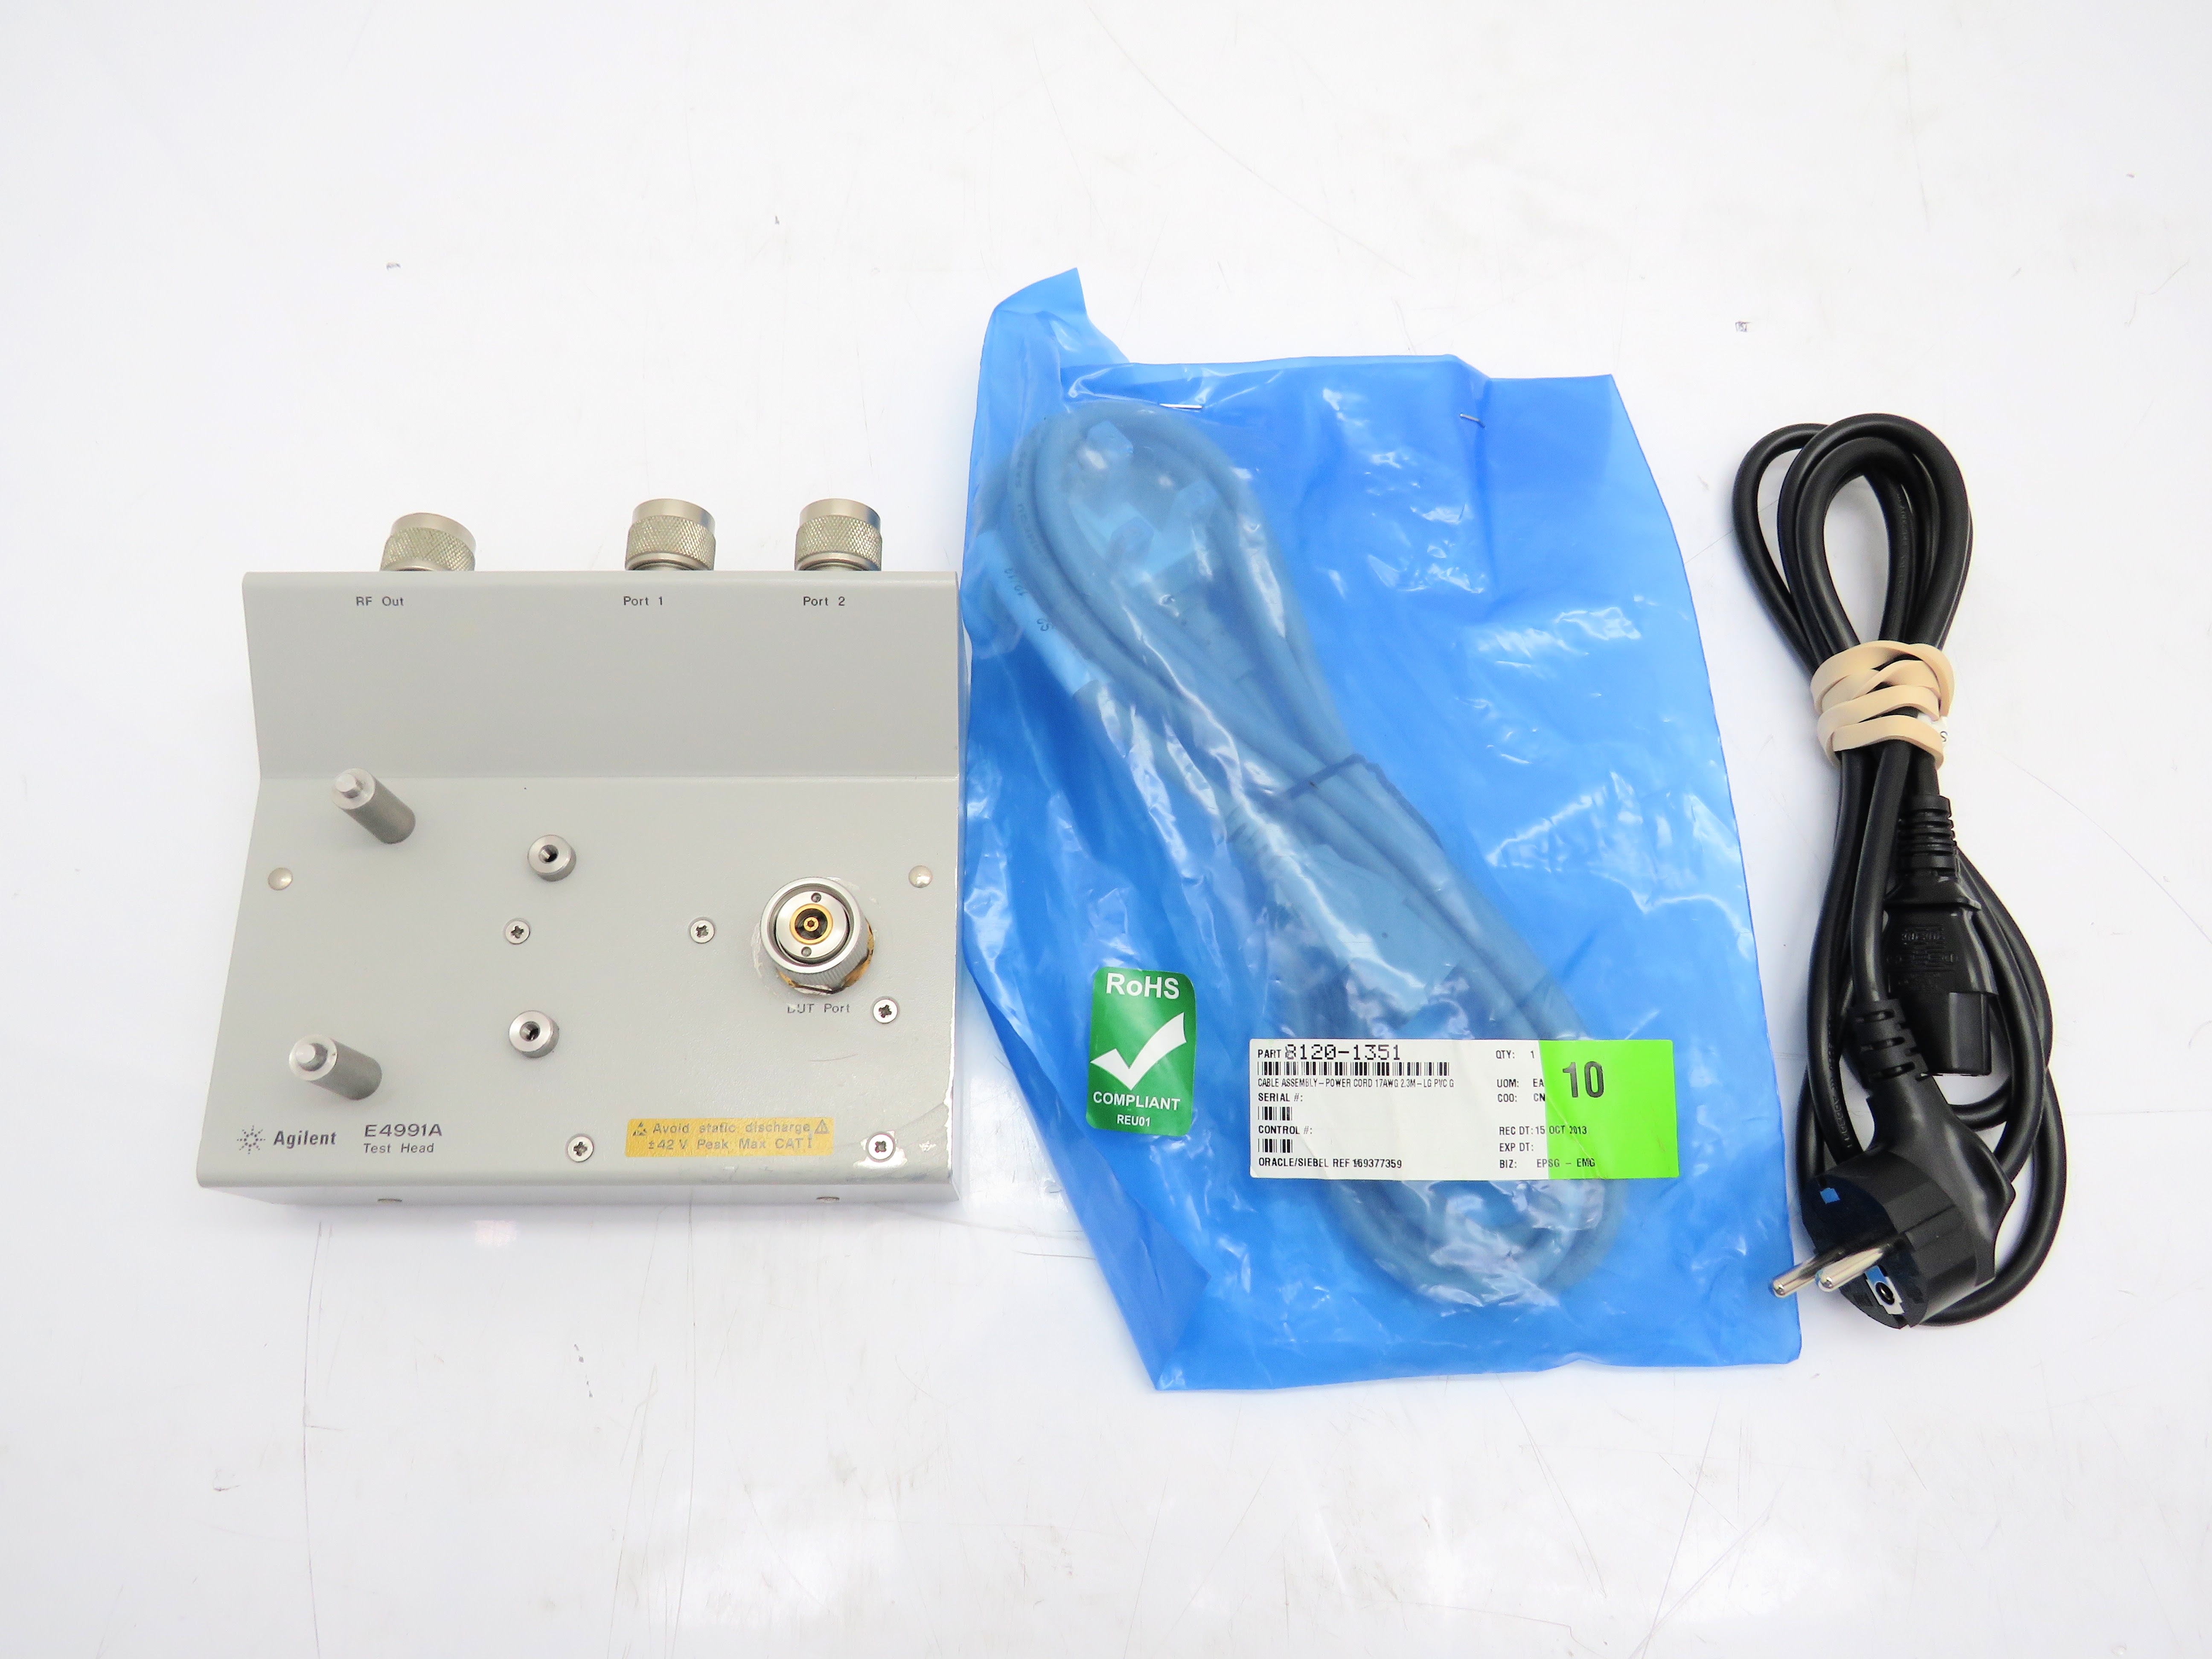 Keysight E4991A RF Impedance/Material Analyzer